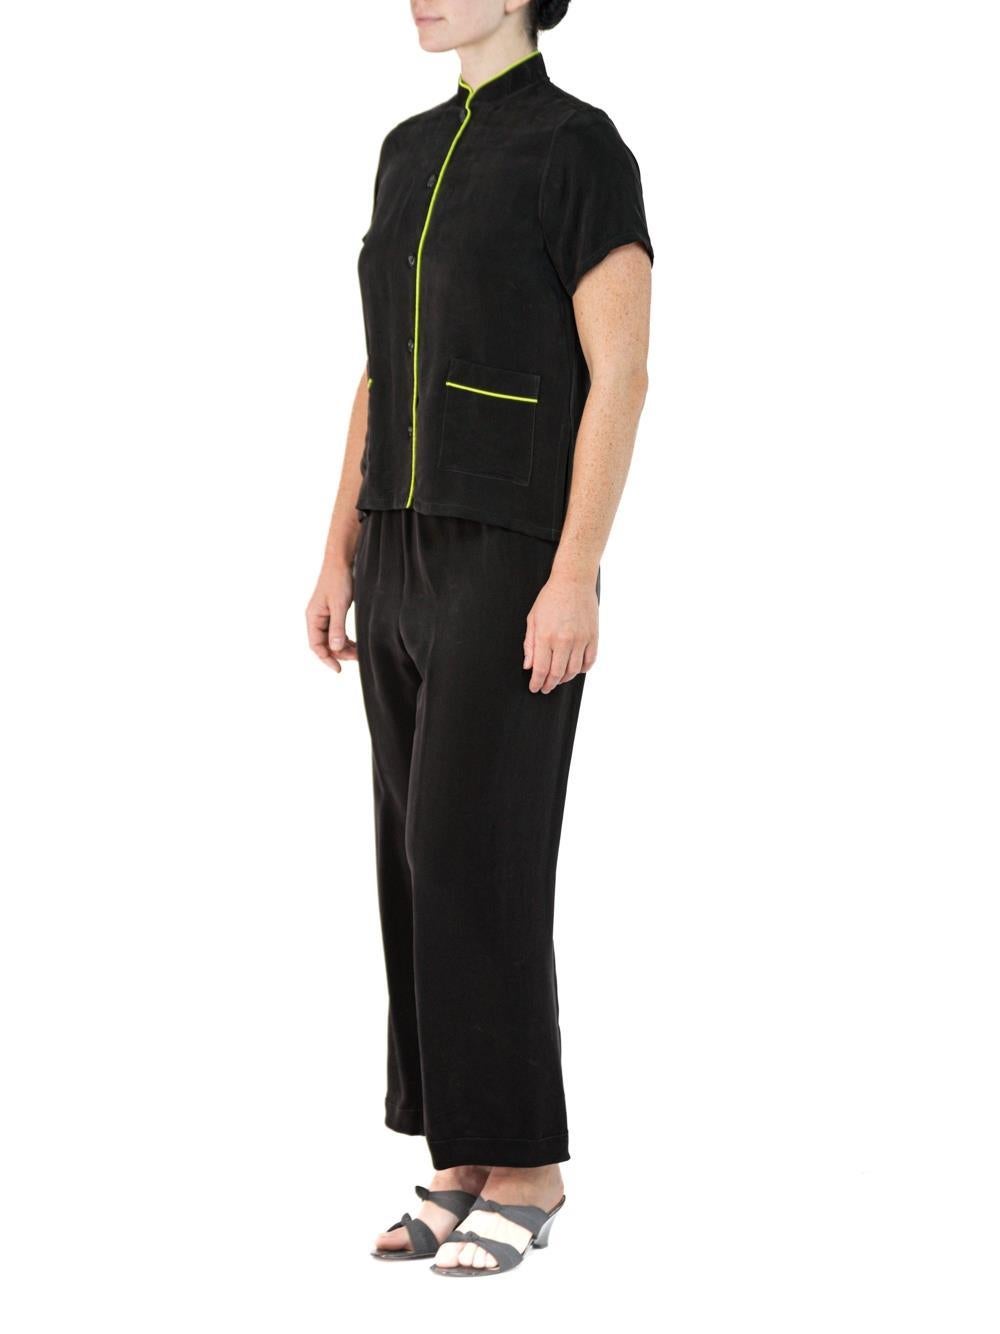 Morphew Collection Black & Neon Yellow Trim Cold Rayon Bias Pajamas Master Medi For Sale 1